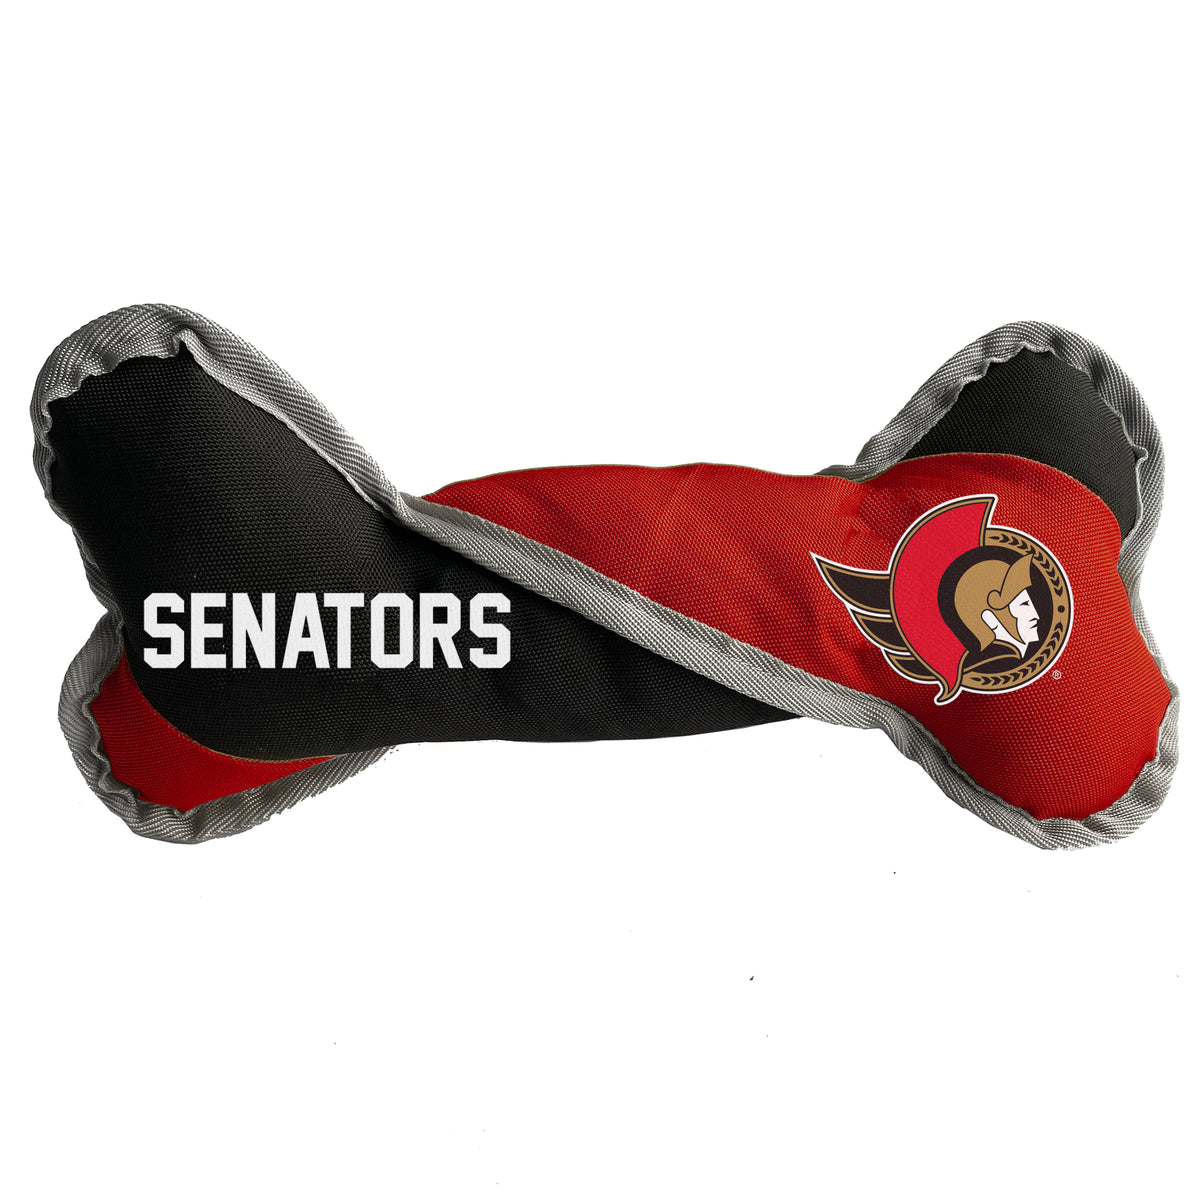 Ottawa Senators Pet Tug Bone - 3 Red Rovers